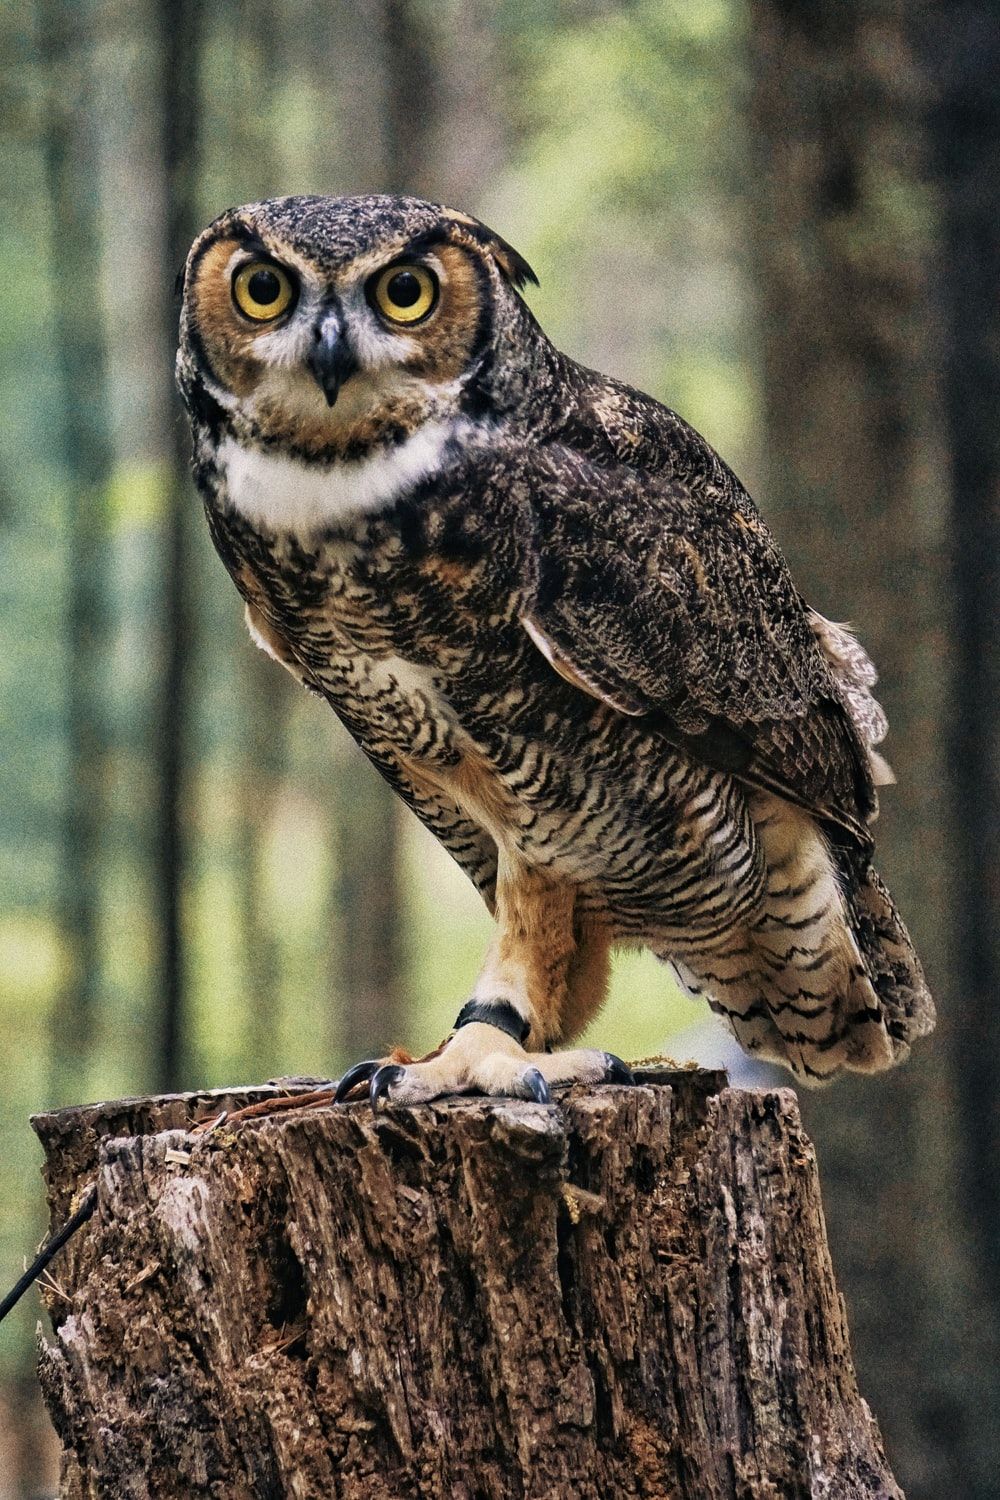 Owl Wallpapers: Descarga gratuita en HD [500+ HQ] | Unsplash